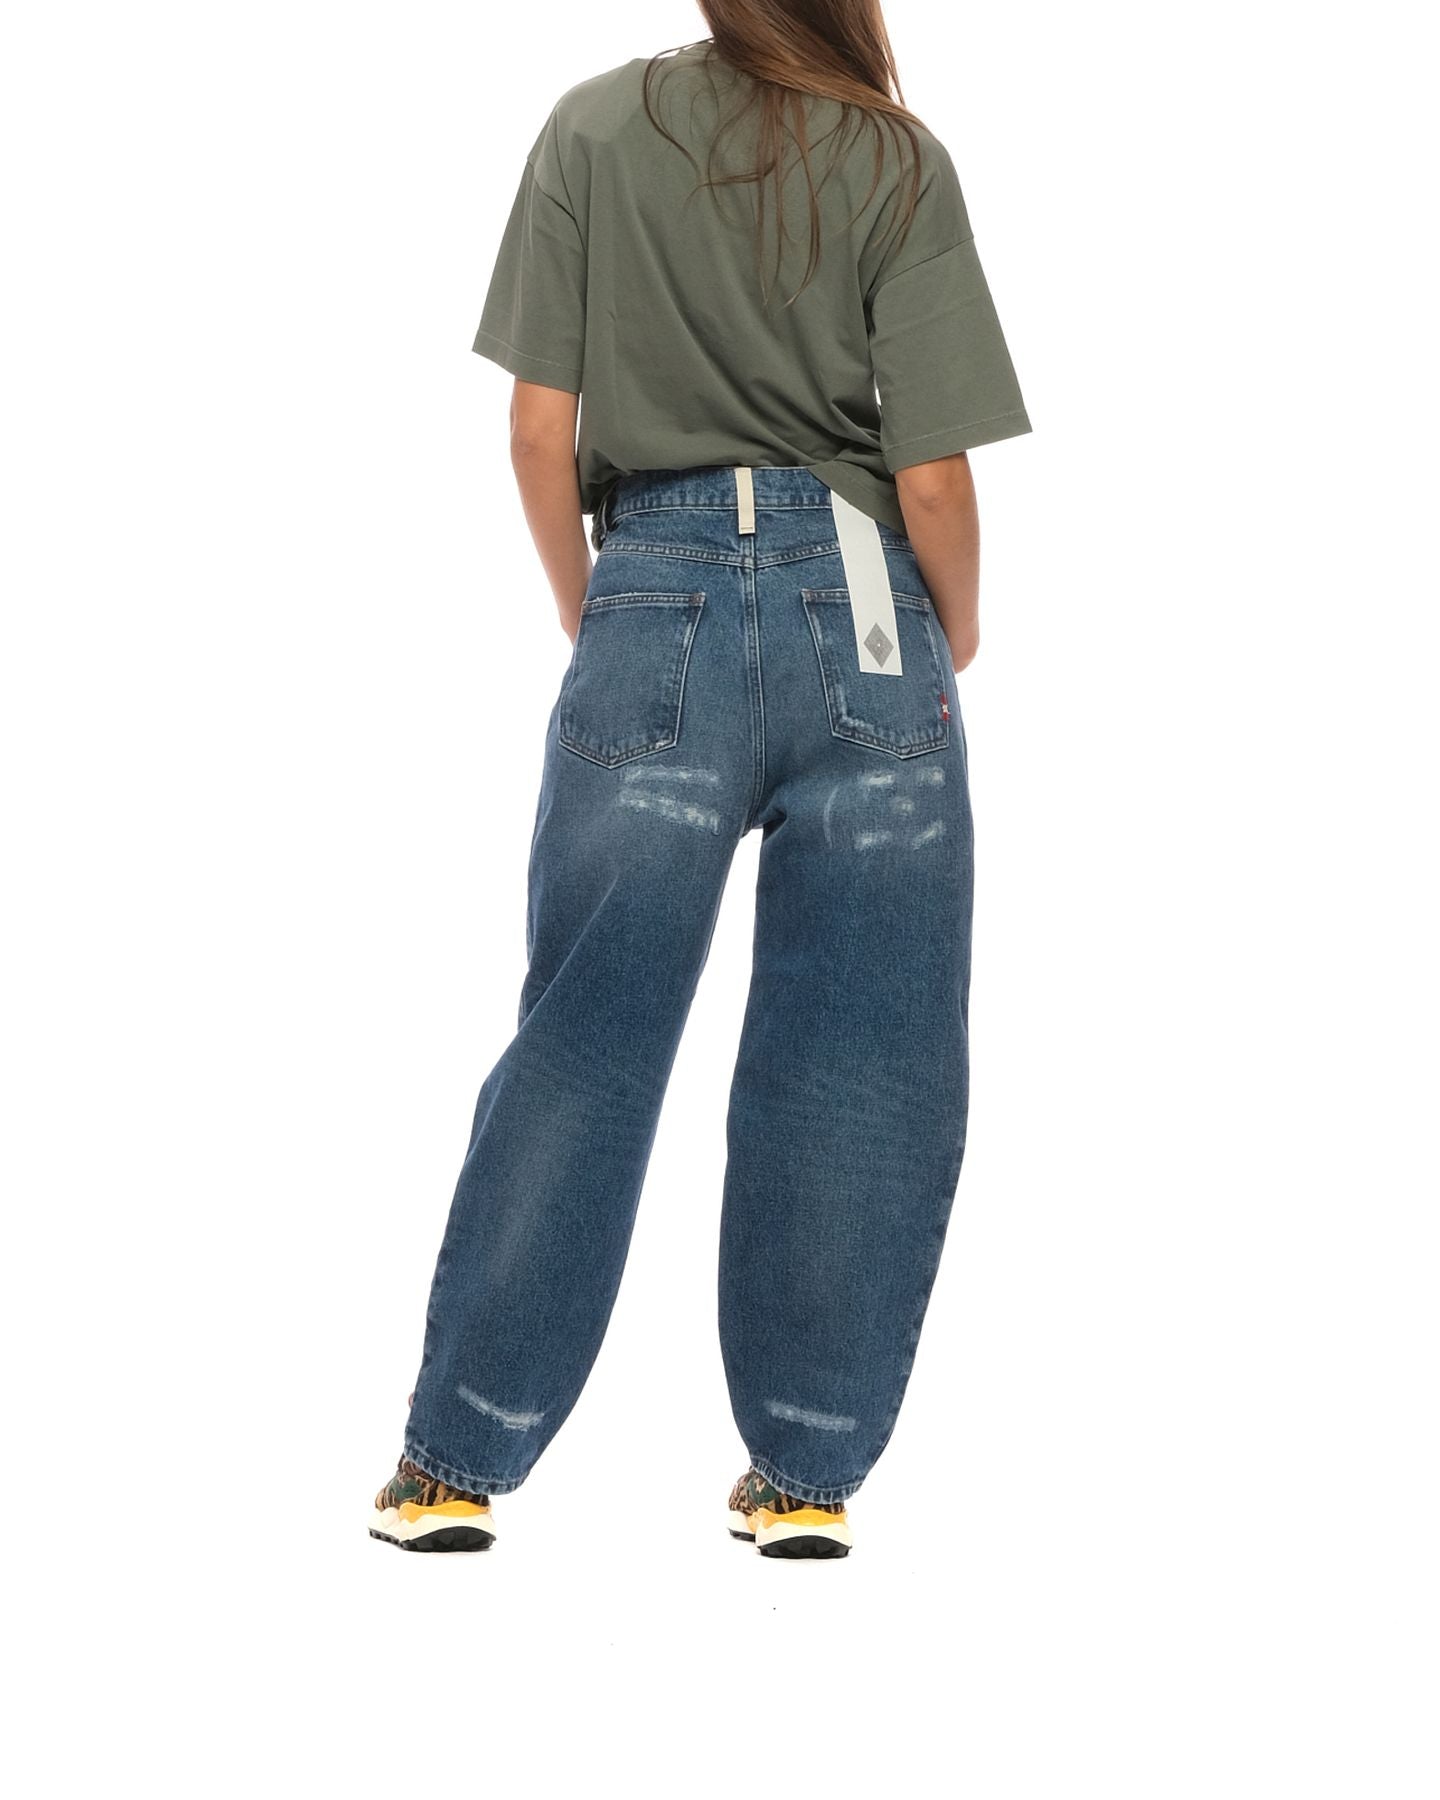 Jeans para mujer AMD047D4352388 999 Denim Amish